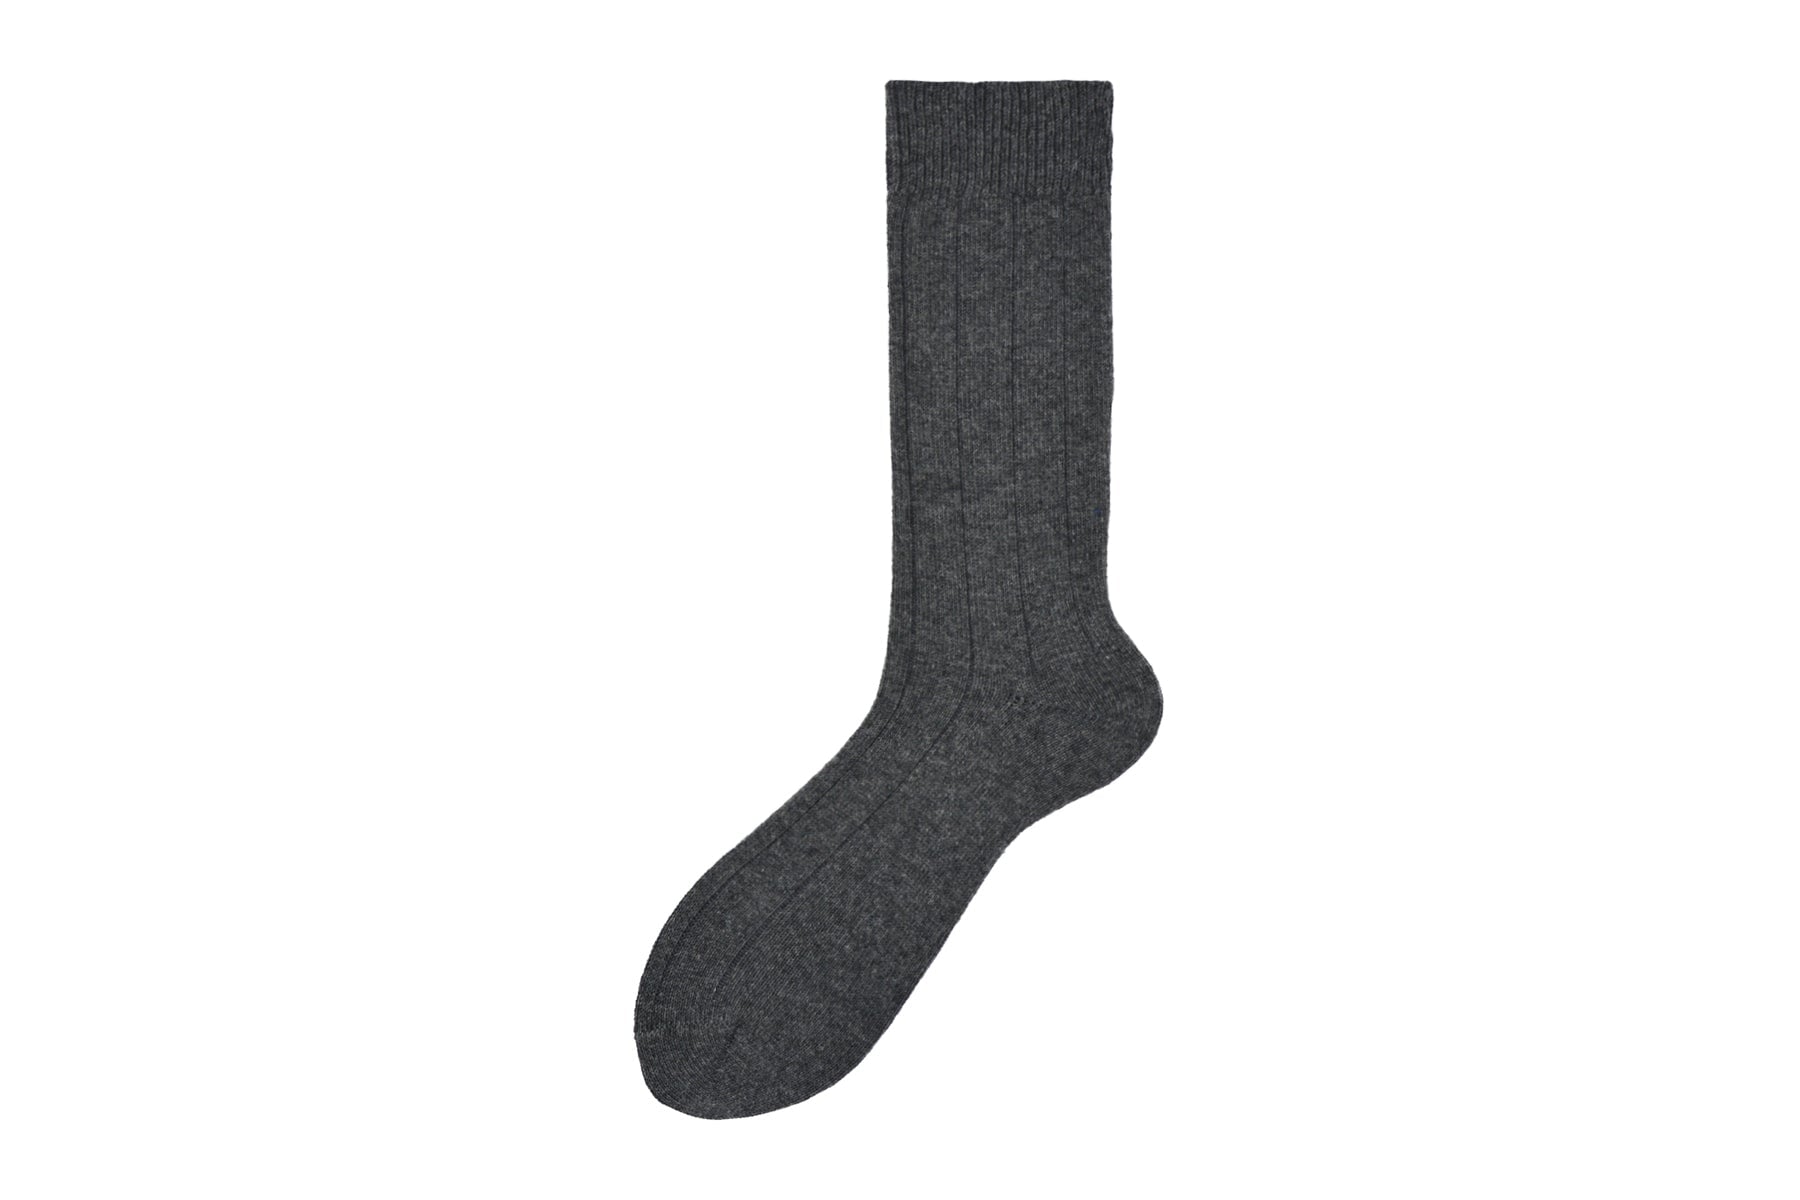 Herren Socken aus Merino Wolle in Grau - Duvet Herren Socken Alto Milano 